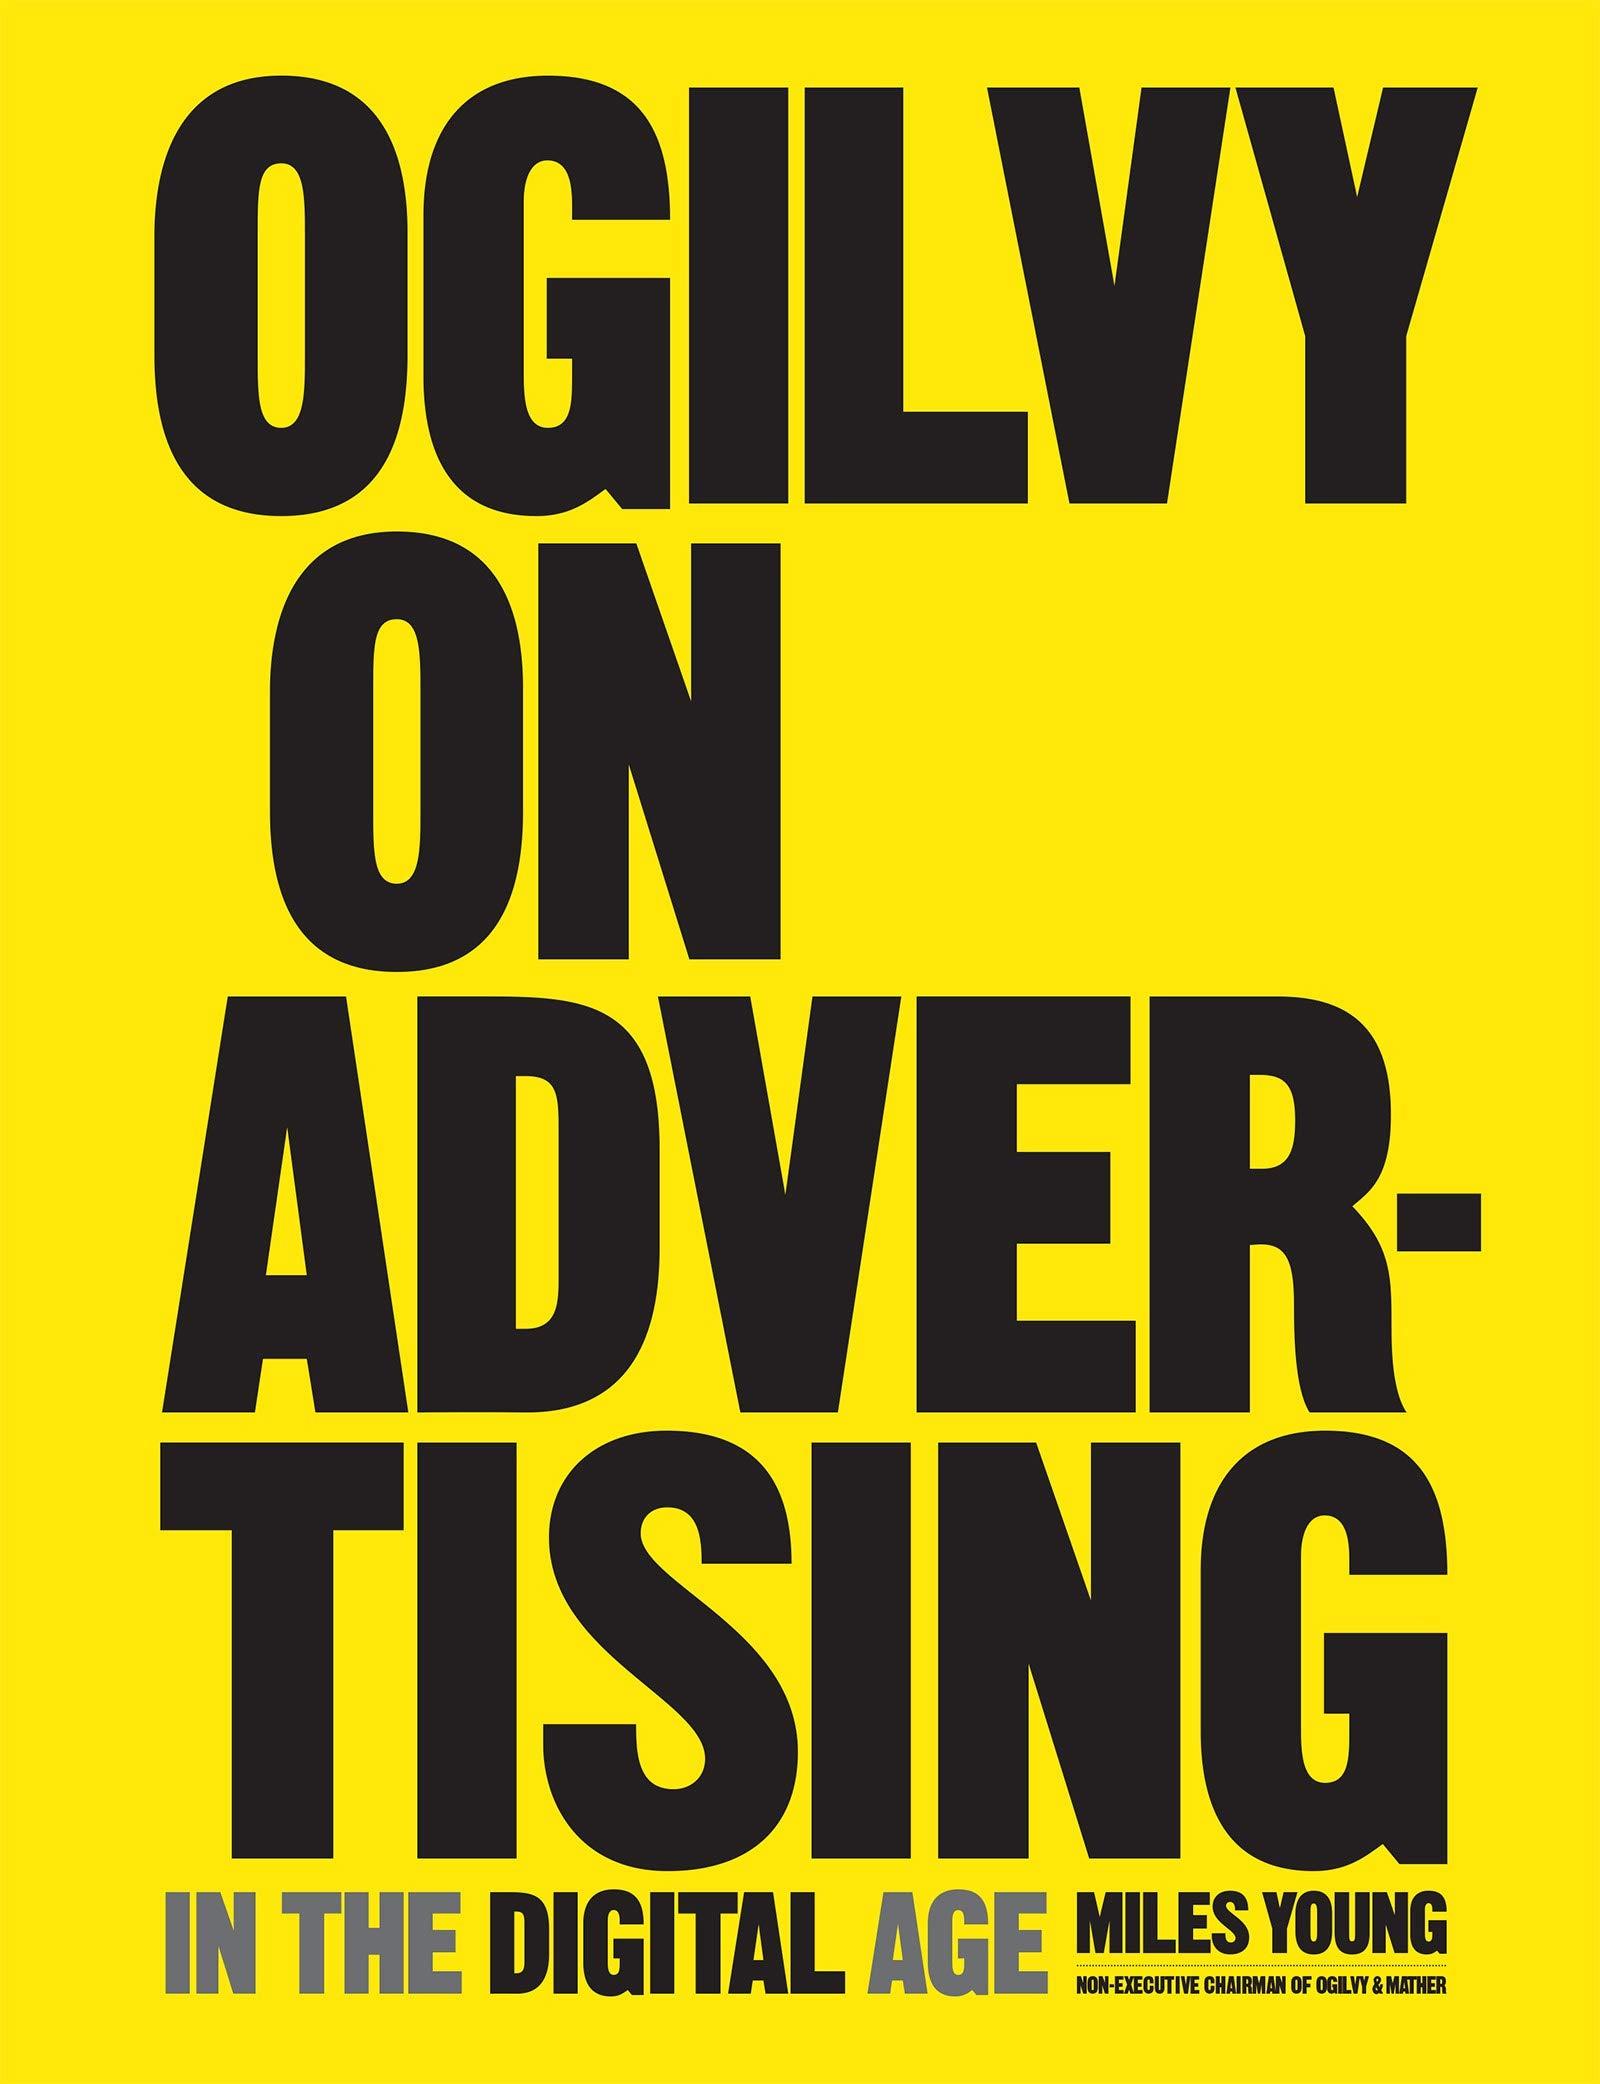 Advertising & Branding